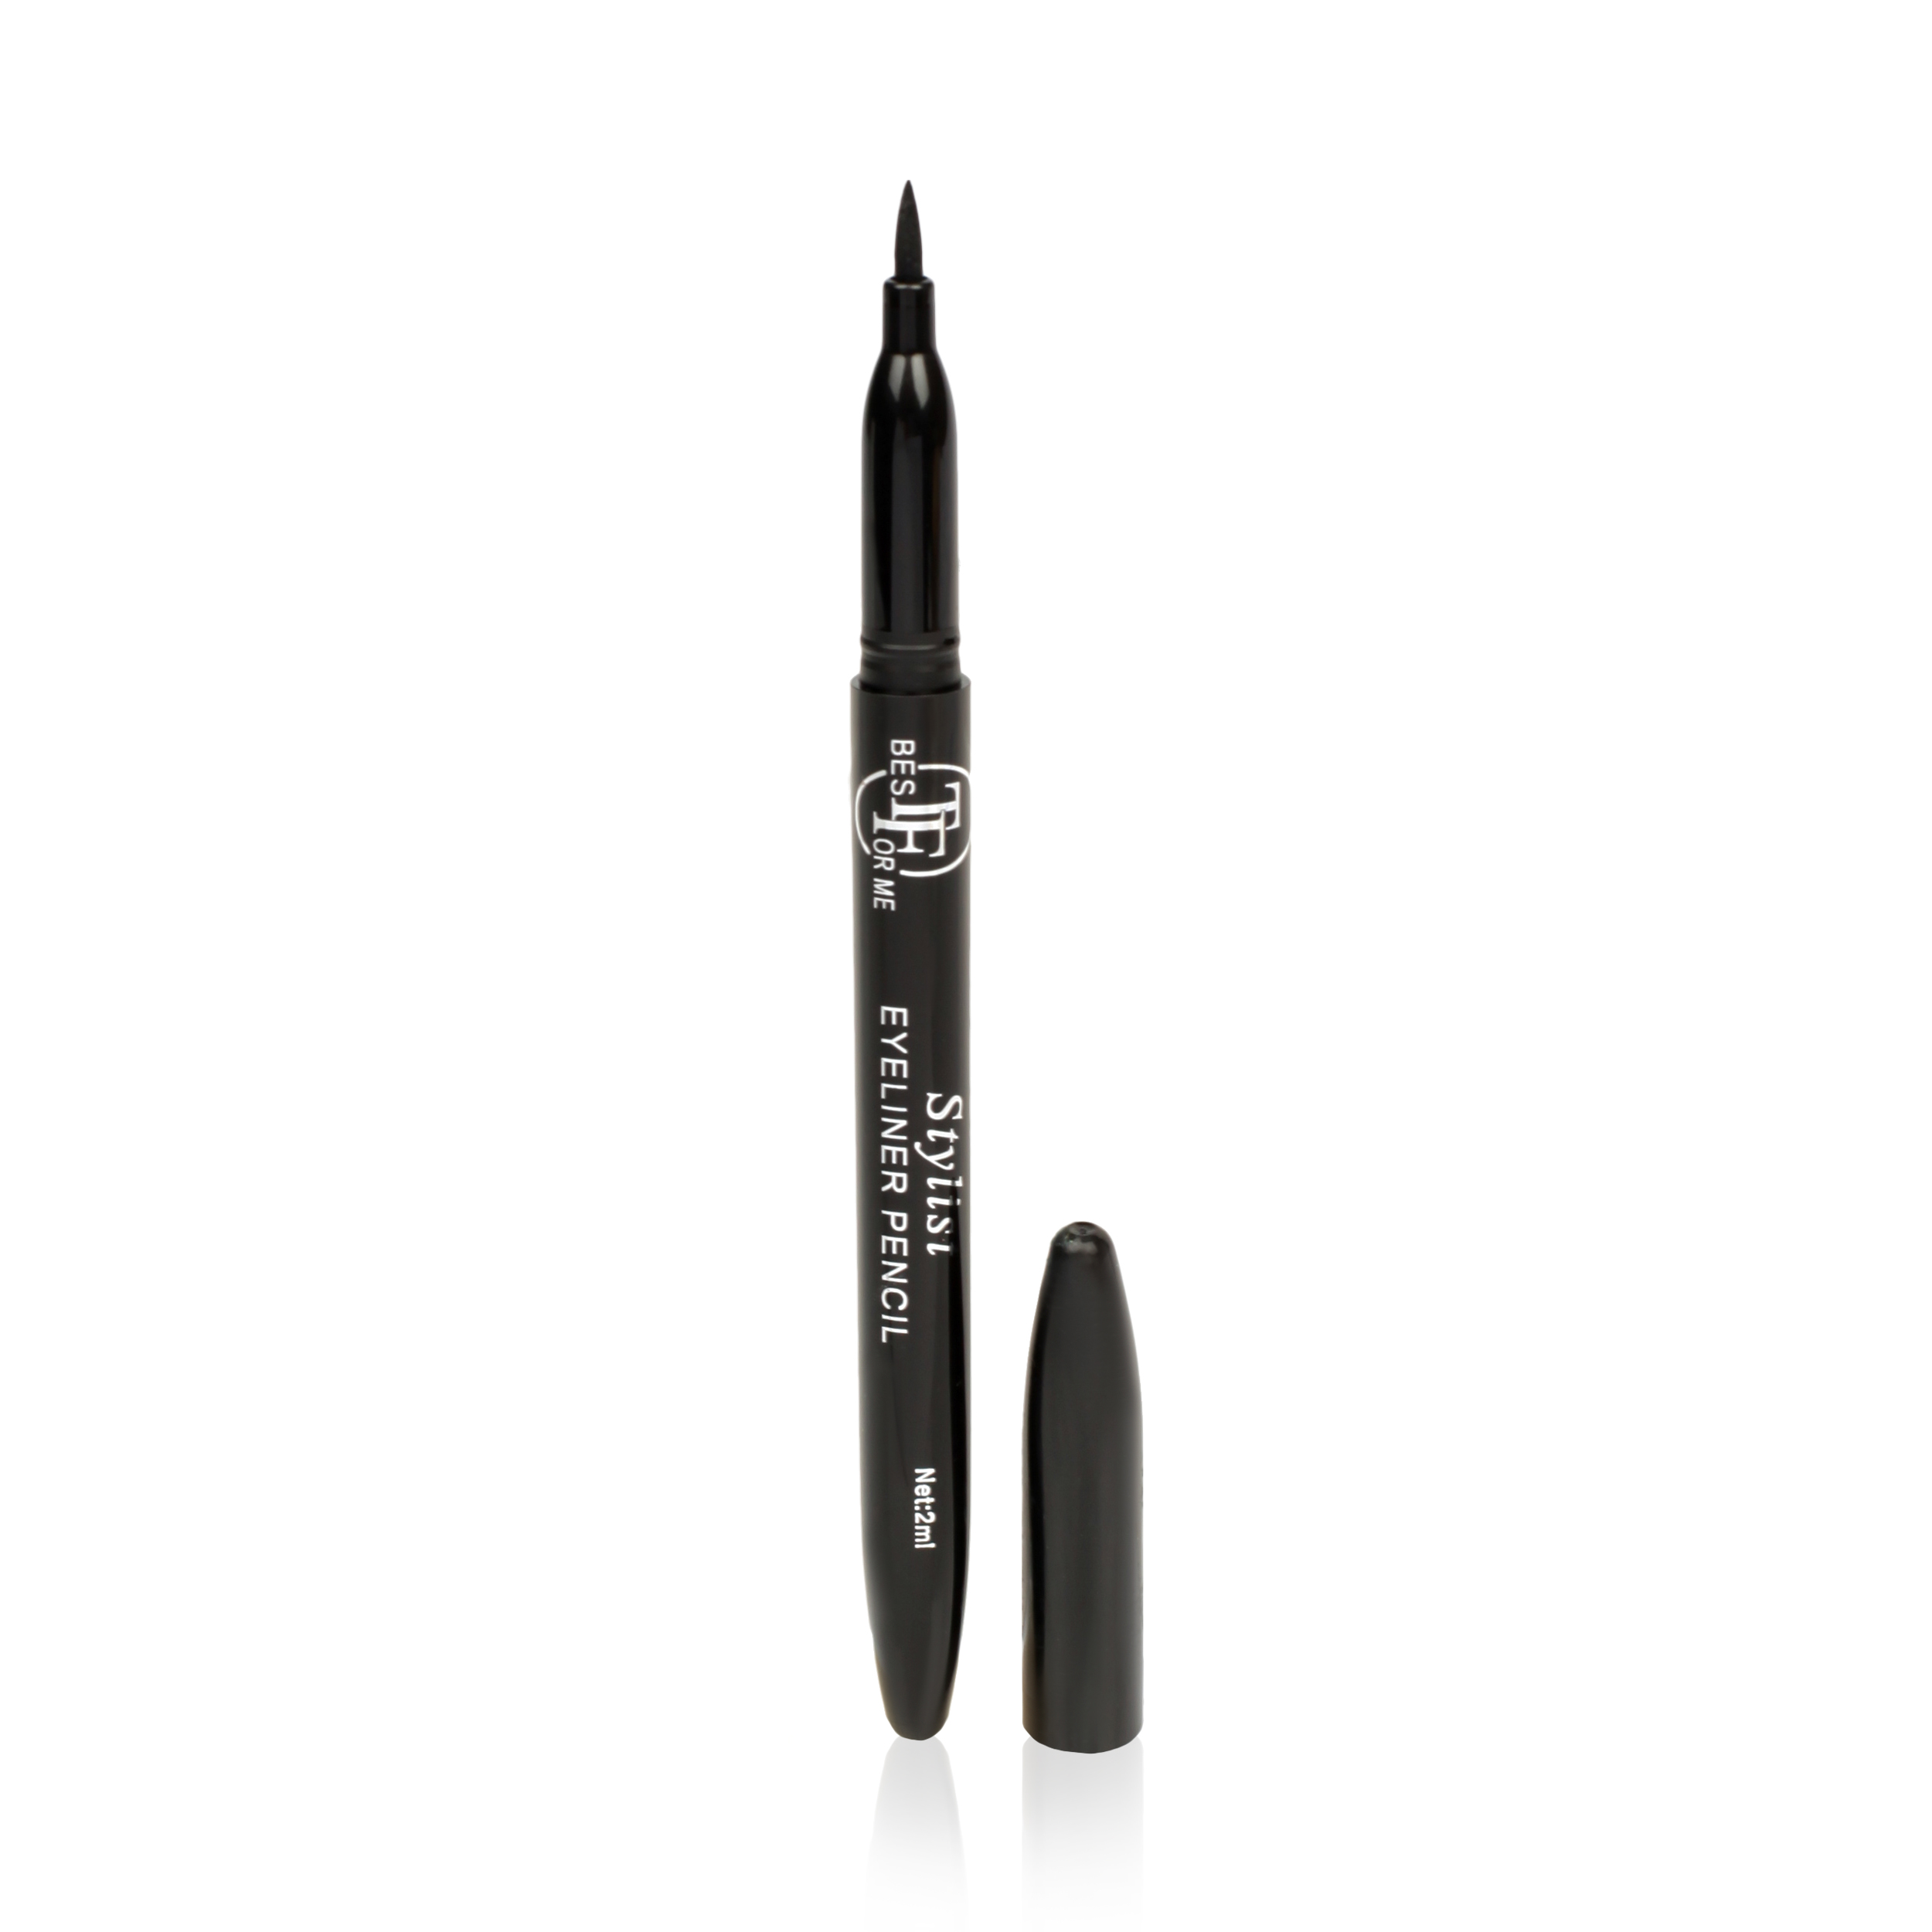 Triumf Подводка для глаз фломастер Best for me "Stylist Eyeliner Pencil" чёрная